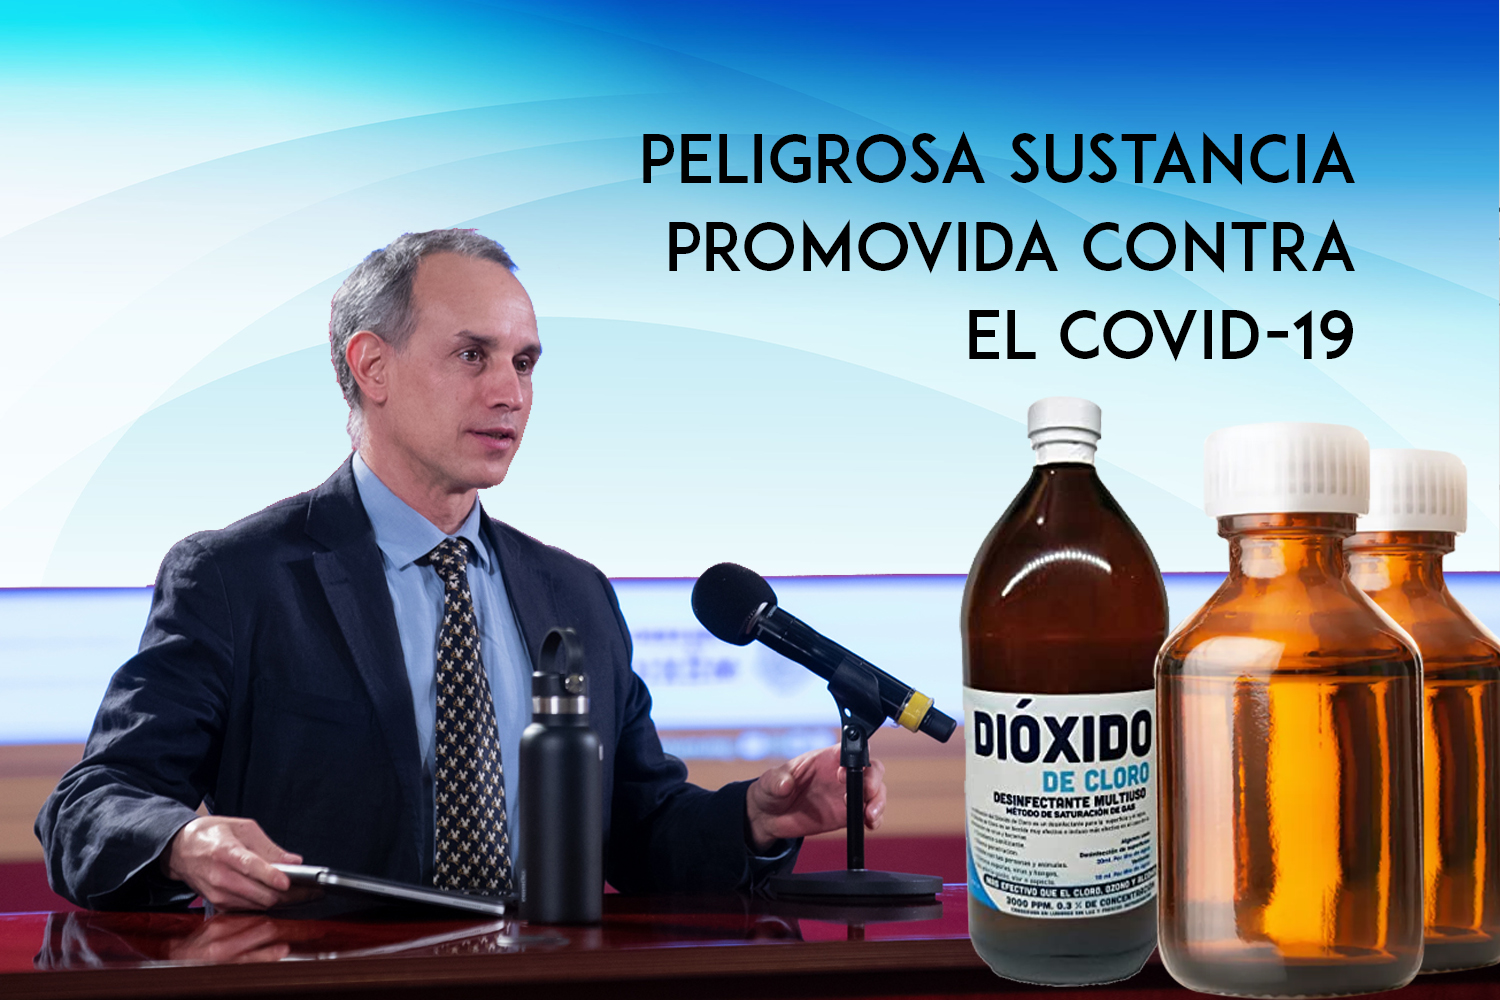 Dióxido de cloro, COVID-19, sustancia química, efectos adversos, cáncer, diabetes asma, malaria, autismo,Hugo López-Gatell, Gatell